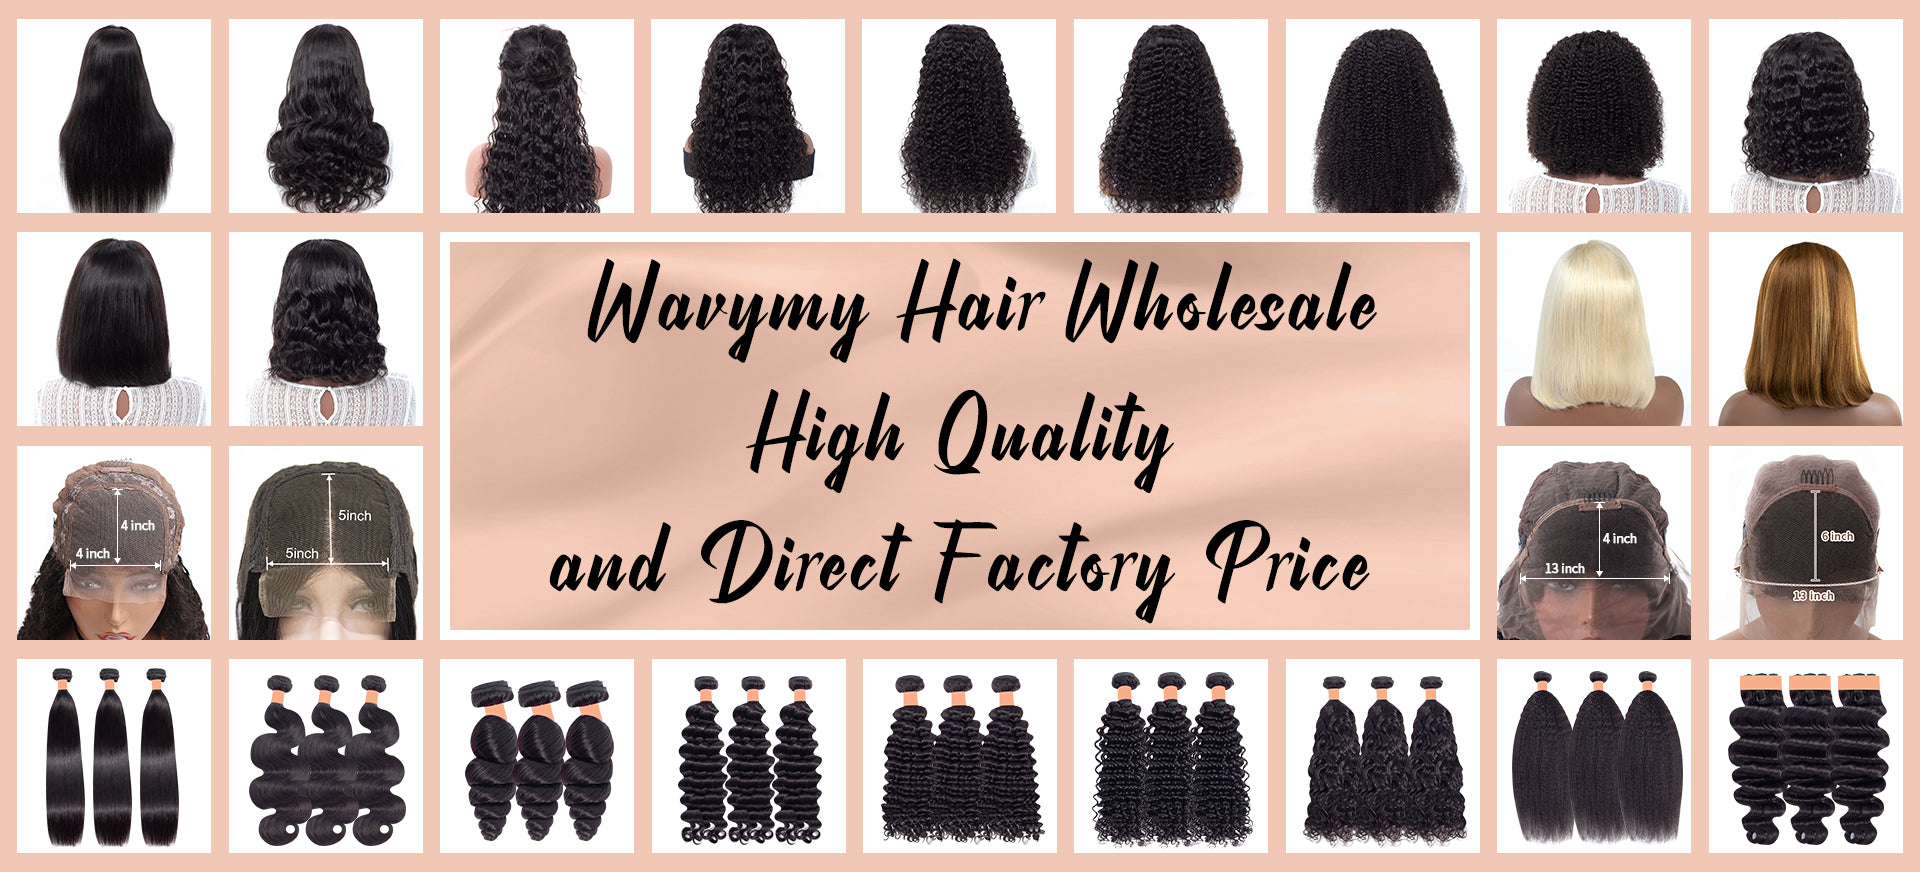 Wavymy Hair Wholesale